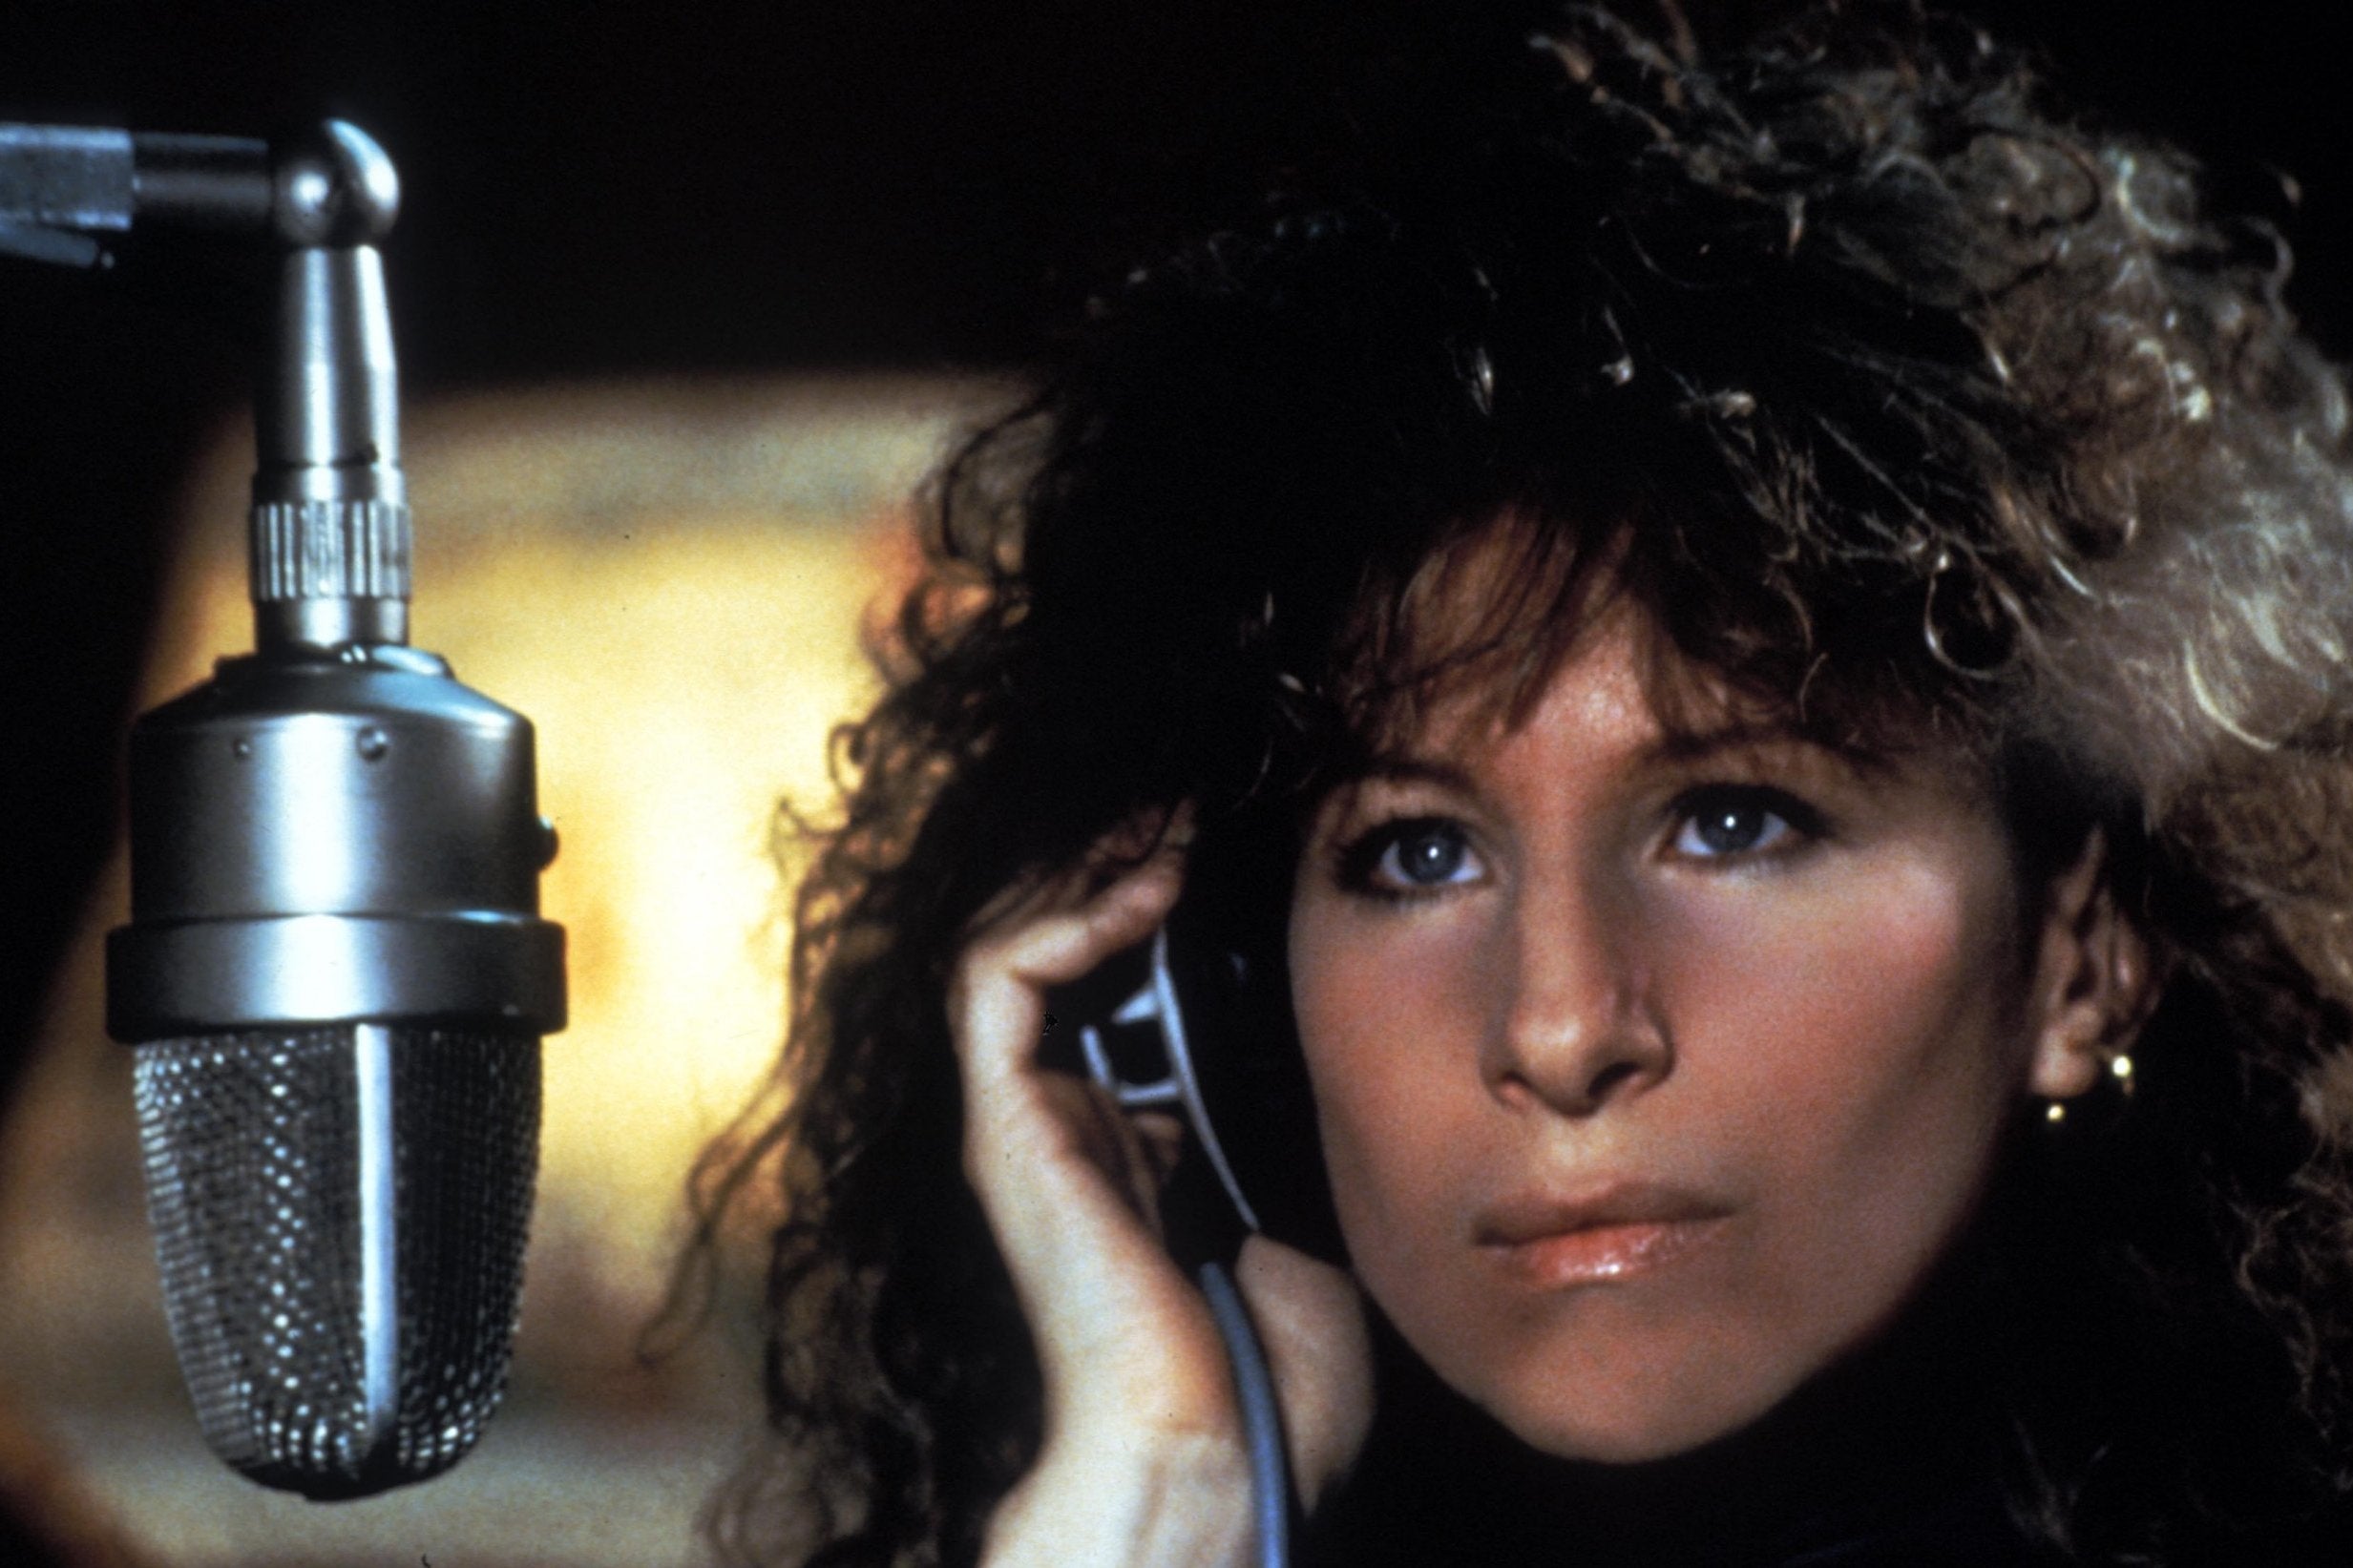 Barbra Streisand reveals her biggest pet peeve about fans in